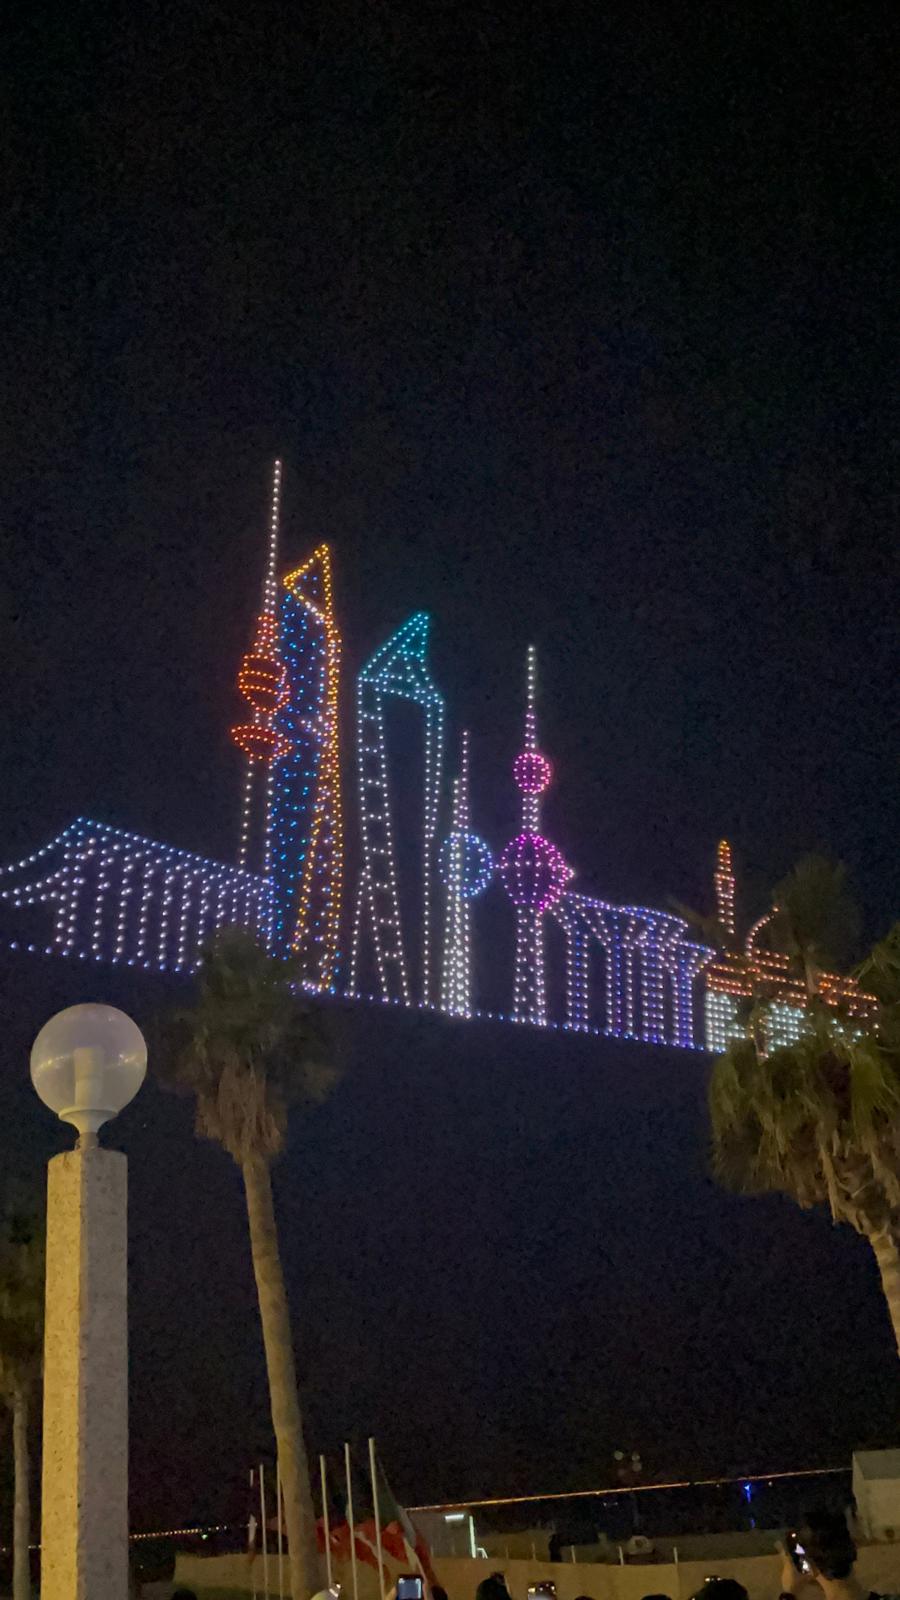 Kuwait Fireworks Show on Celebration Of National Day 10